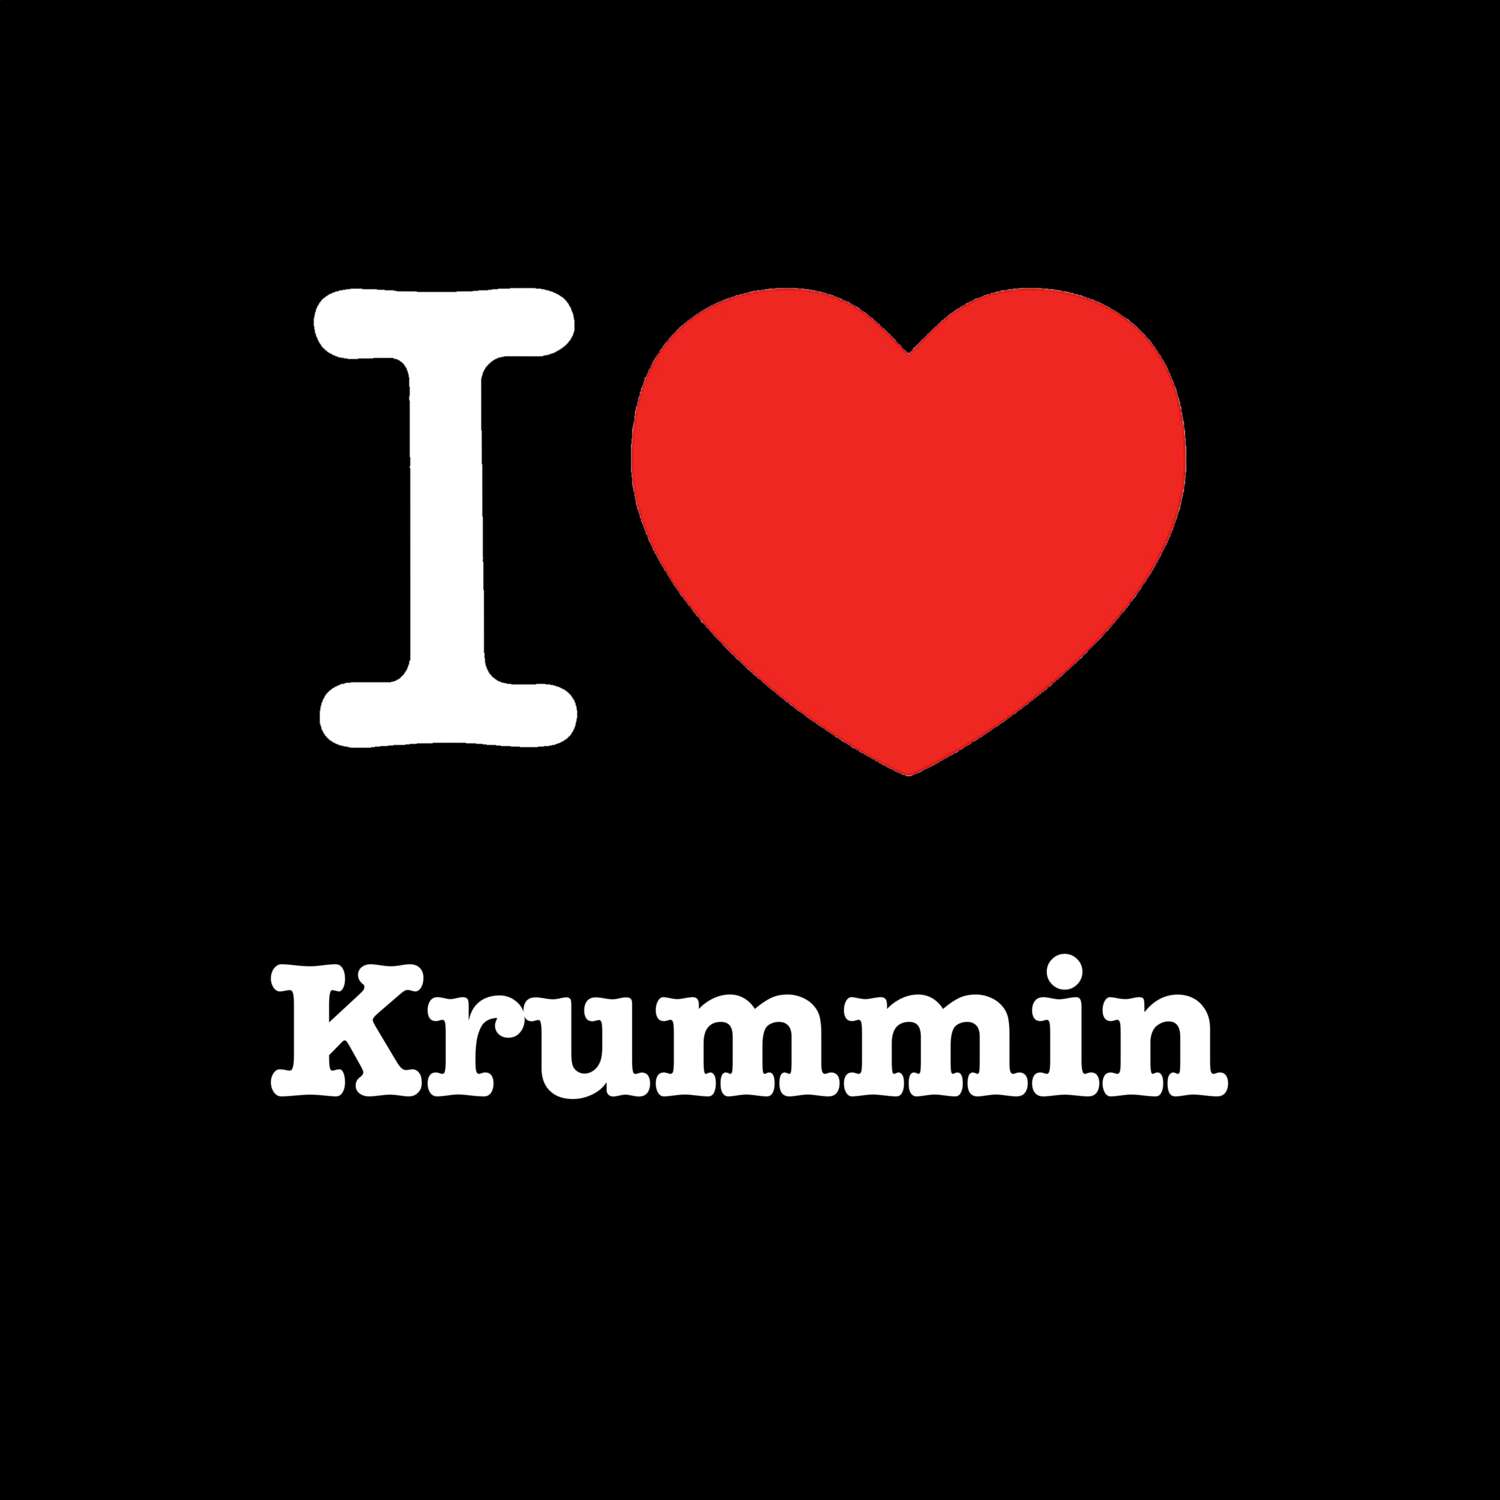 Krummin T-Shirt »I love«